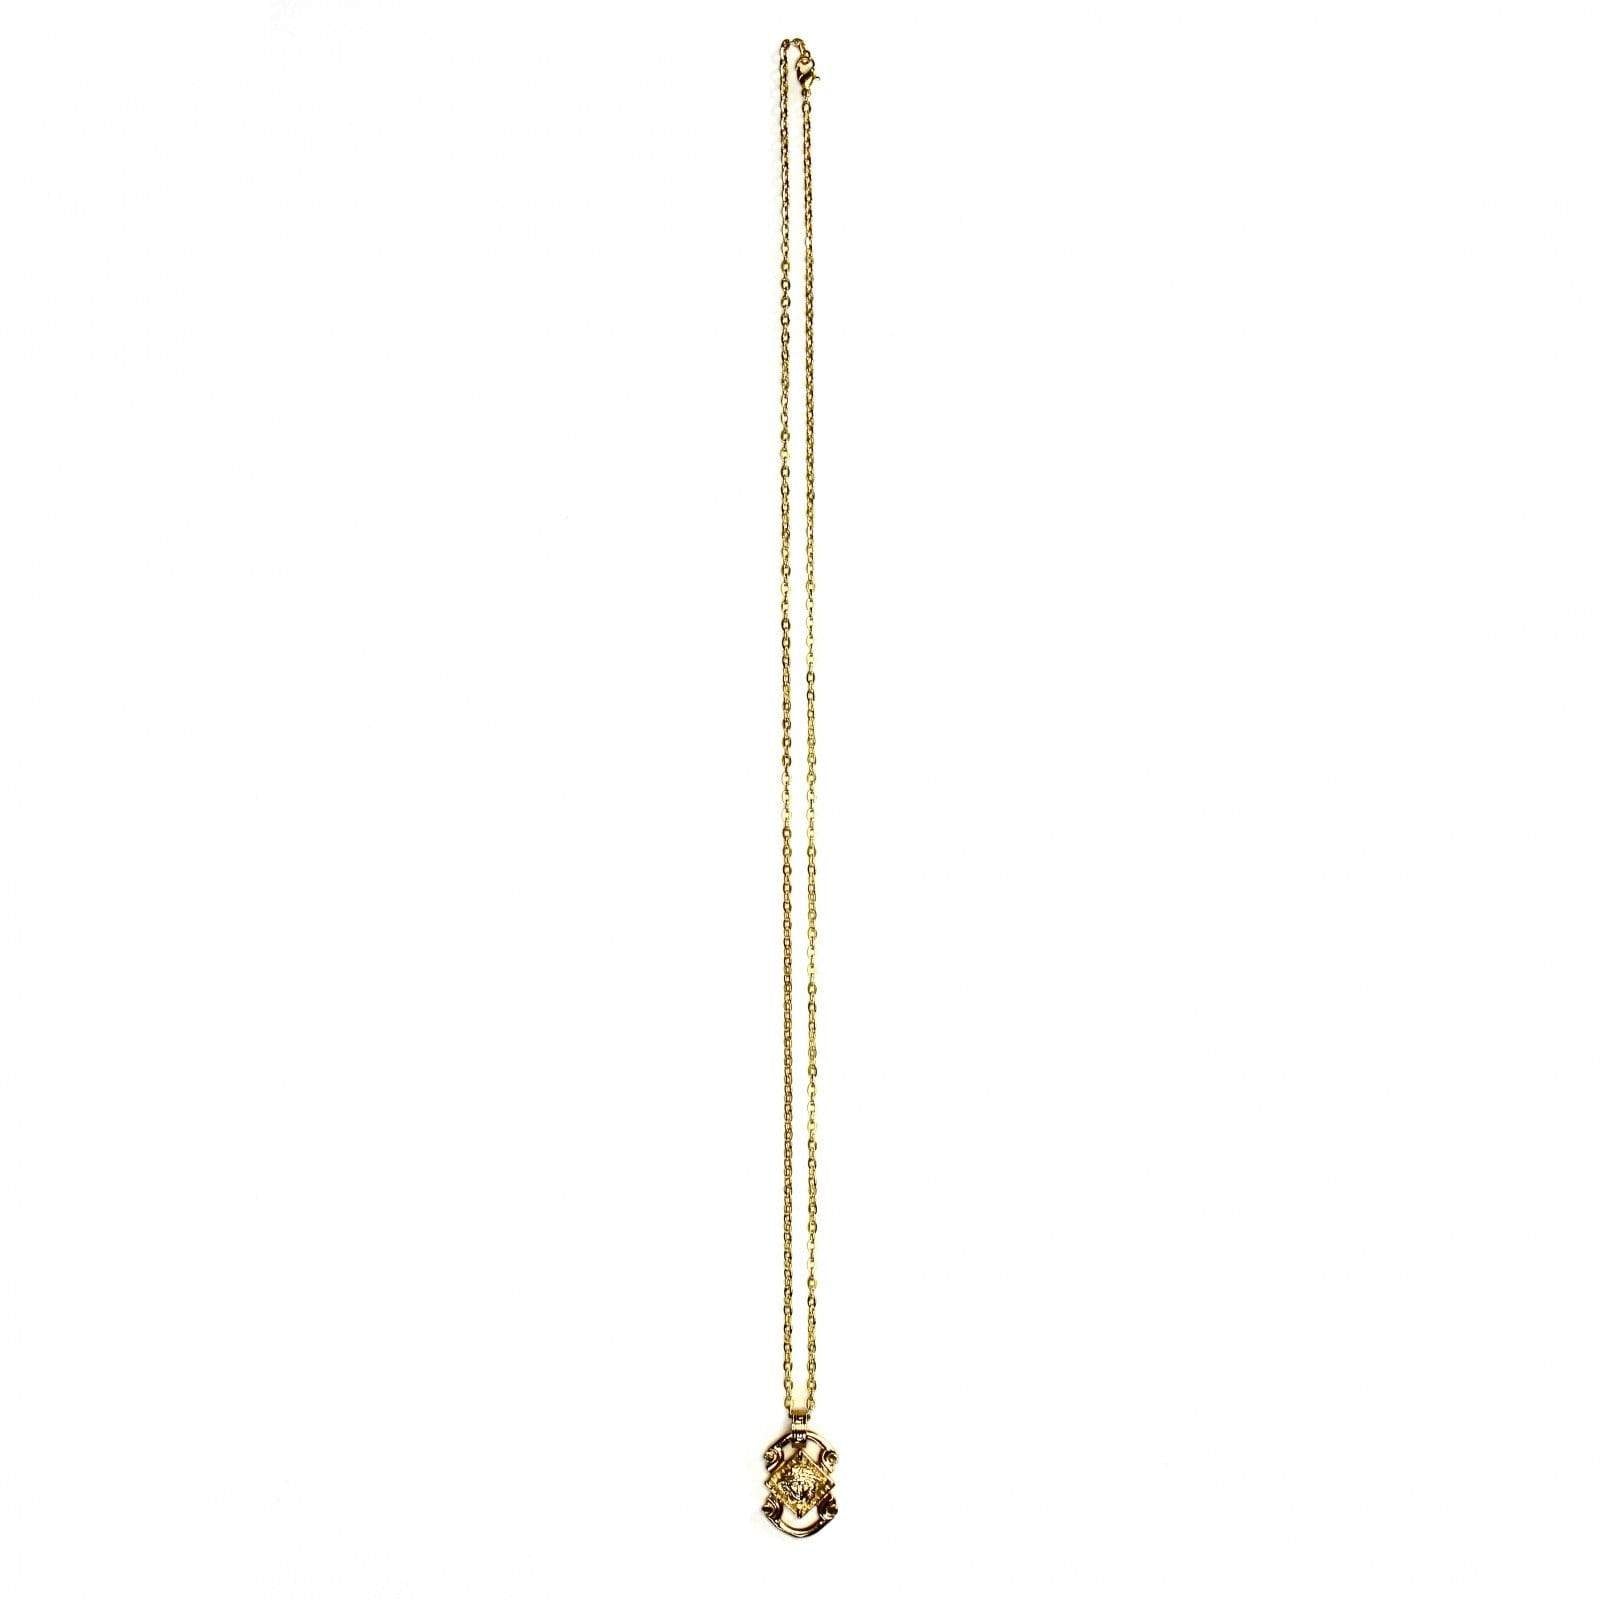 Gold Gianni Versace Medusa Head Greek Key Detailed Pendent Chain RSTKD Vintage